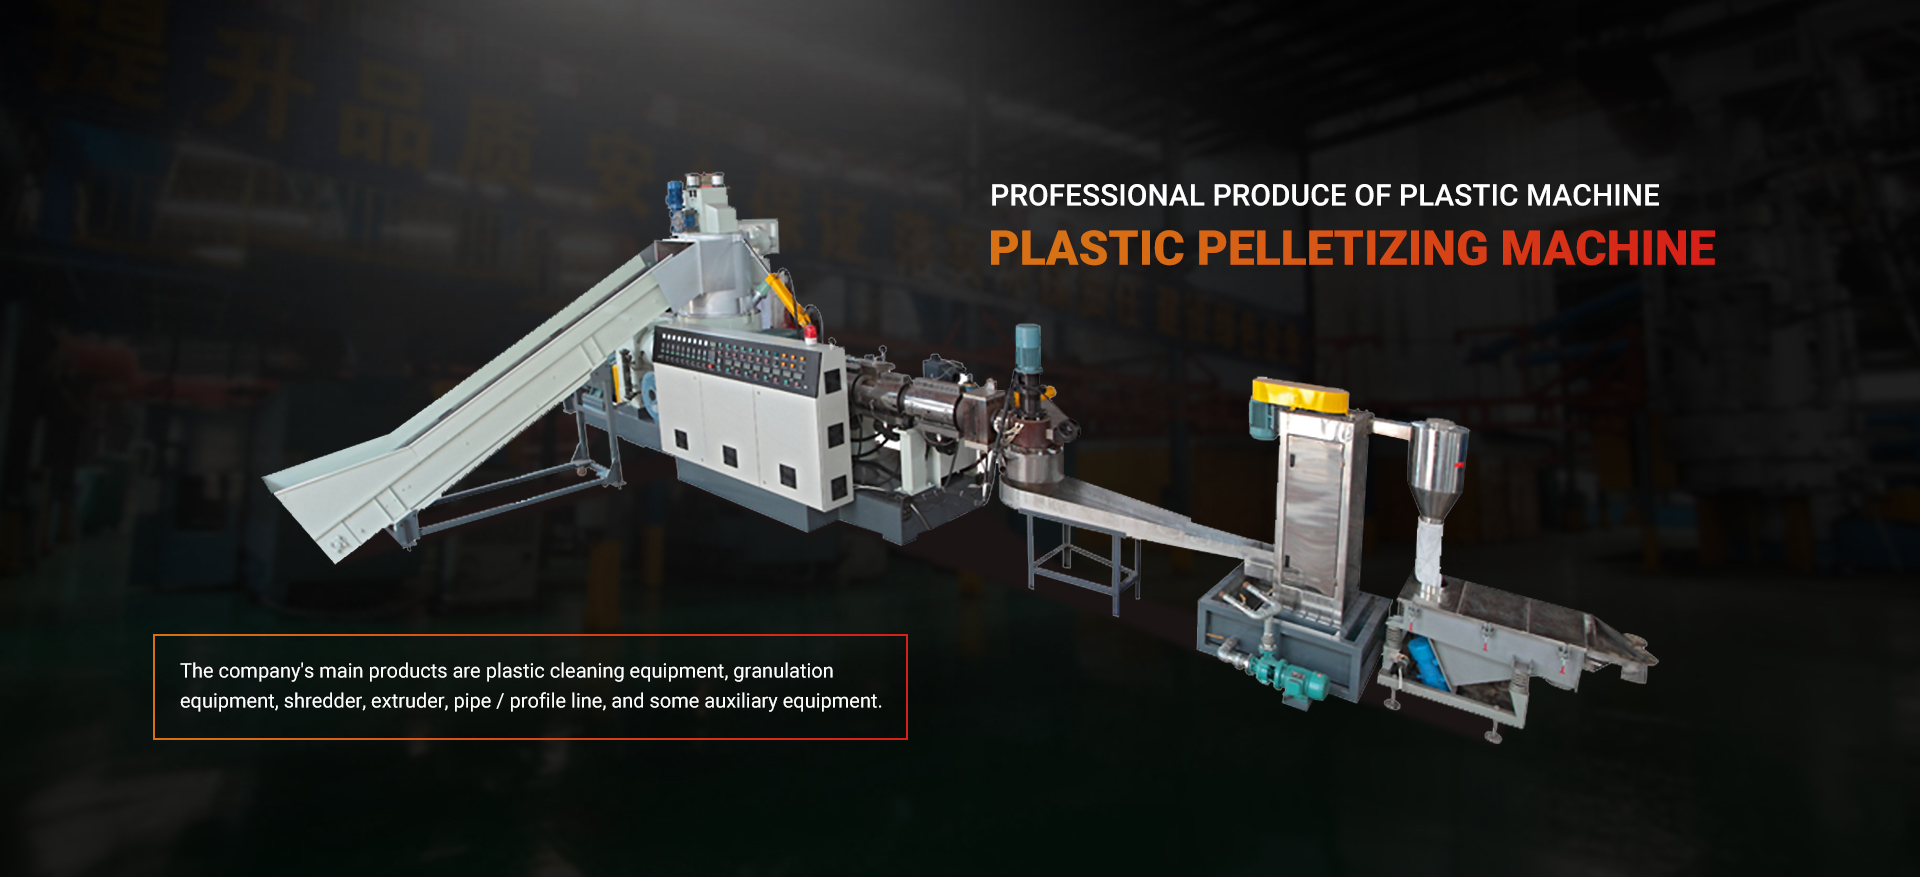 Single/double shaft shredder  professional produce of plastic machine 